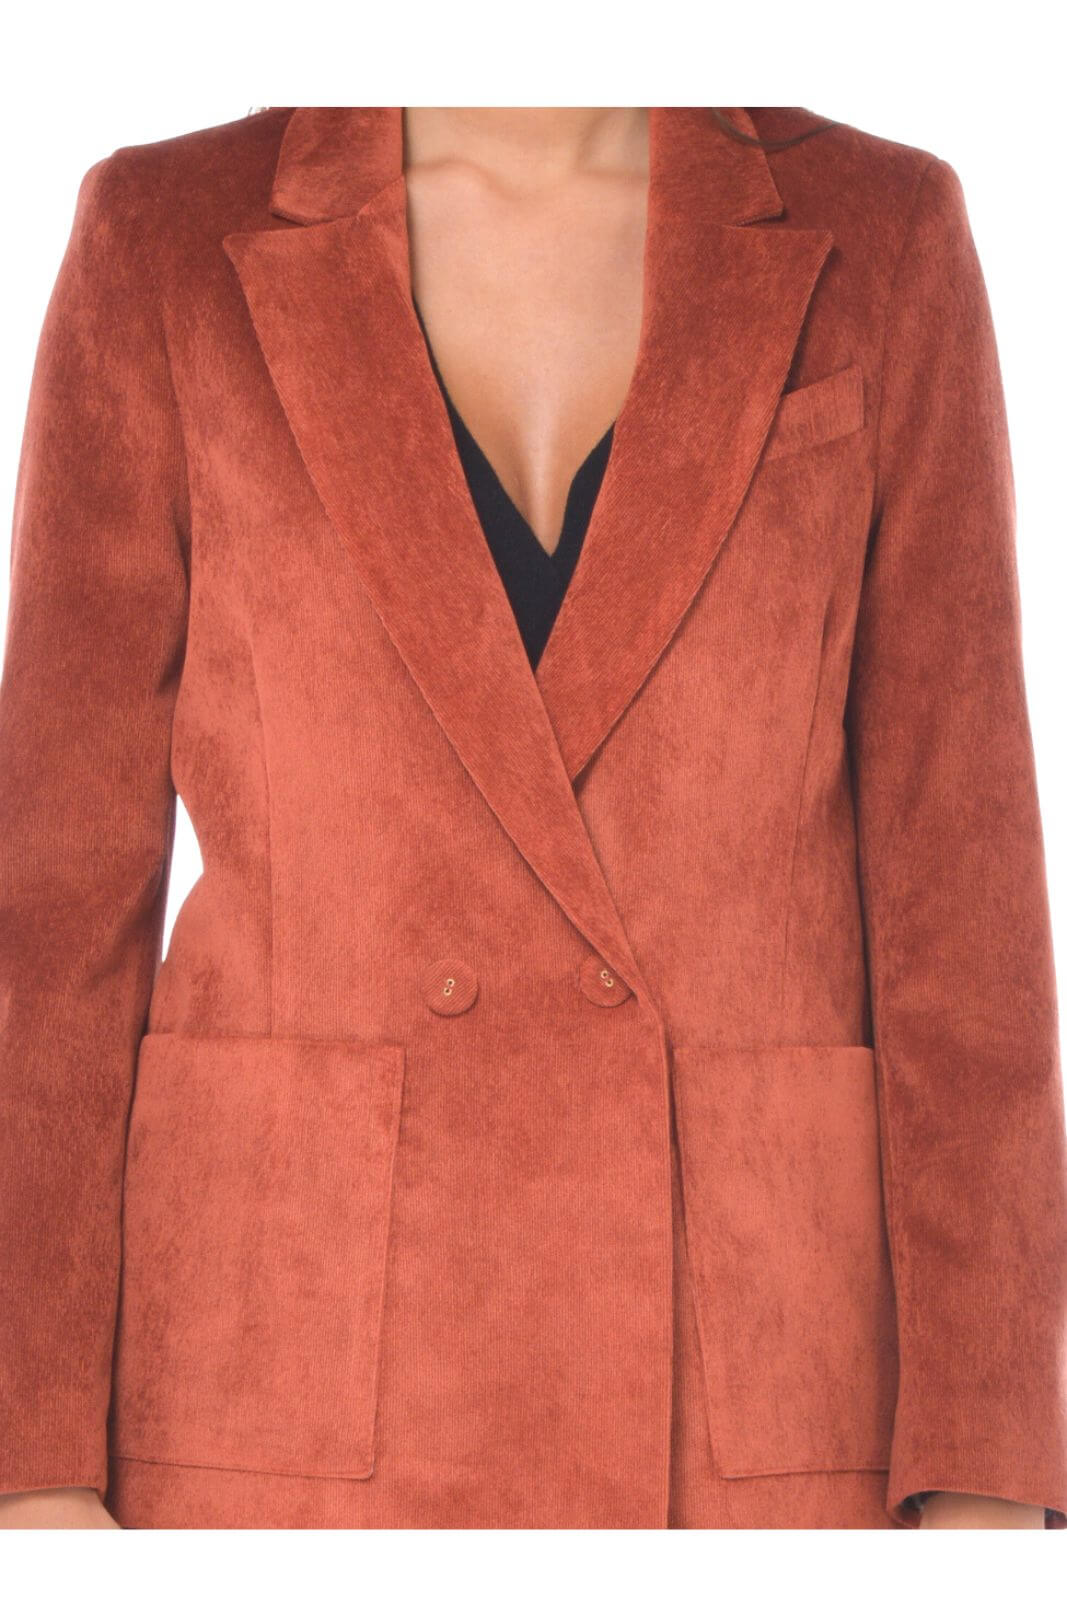 Kaos Women's double-breasted velvet jacket